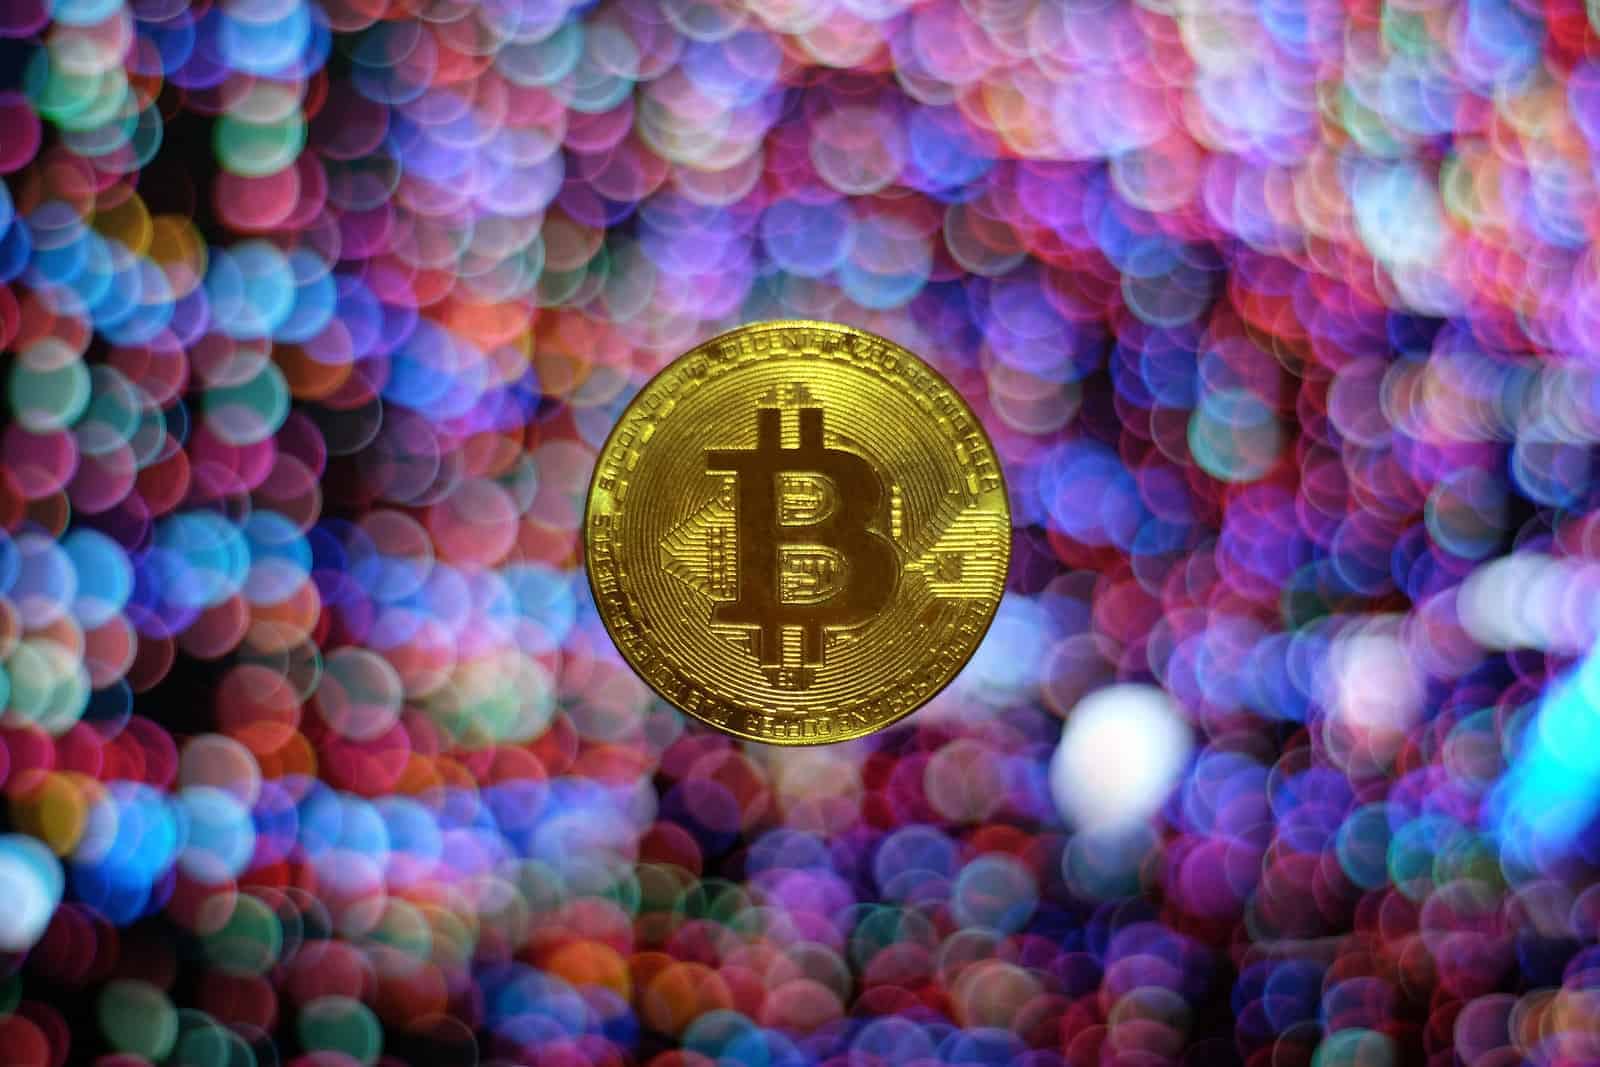 Bitcoin Pros and Cons